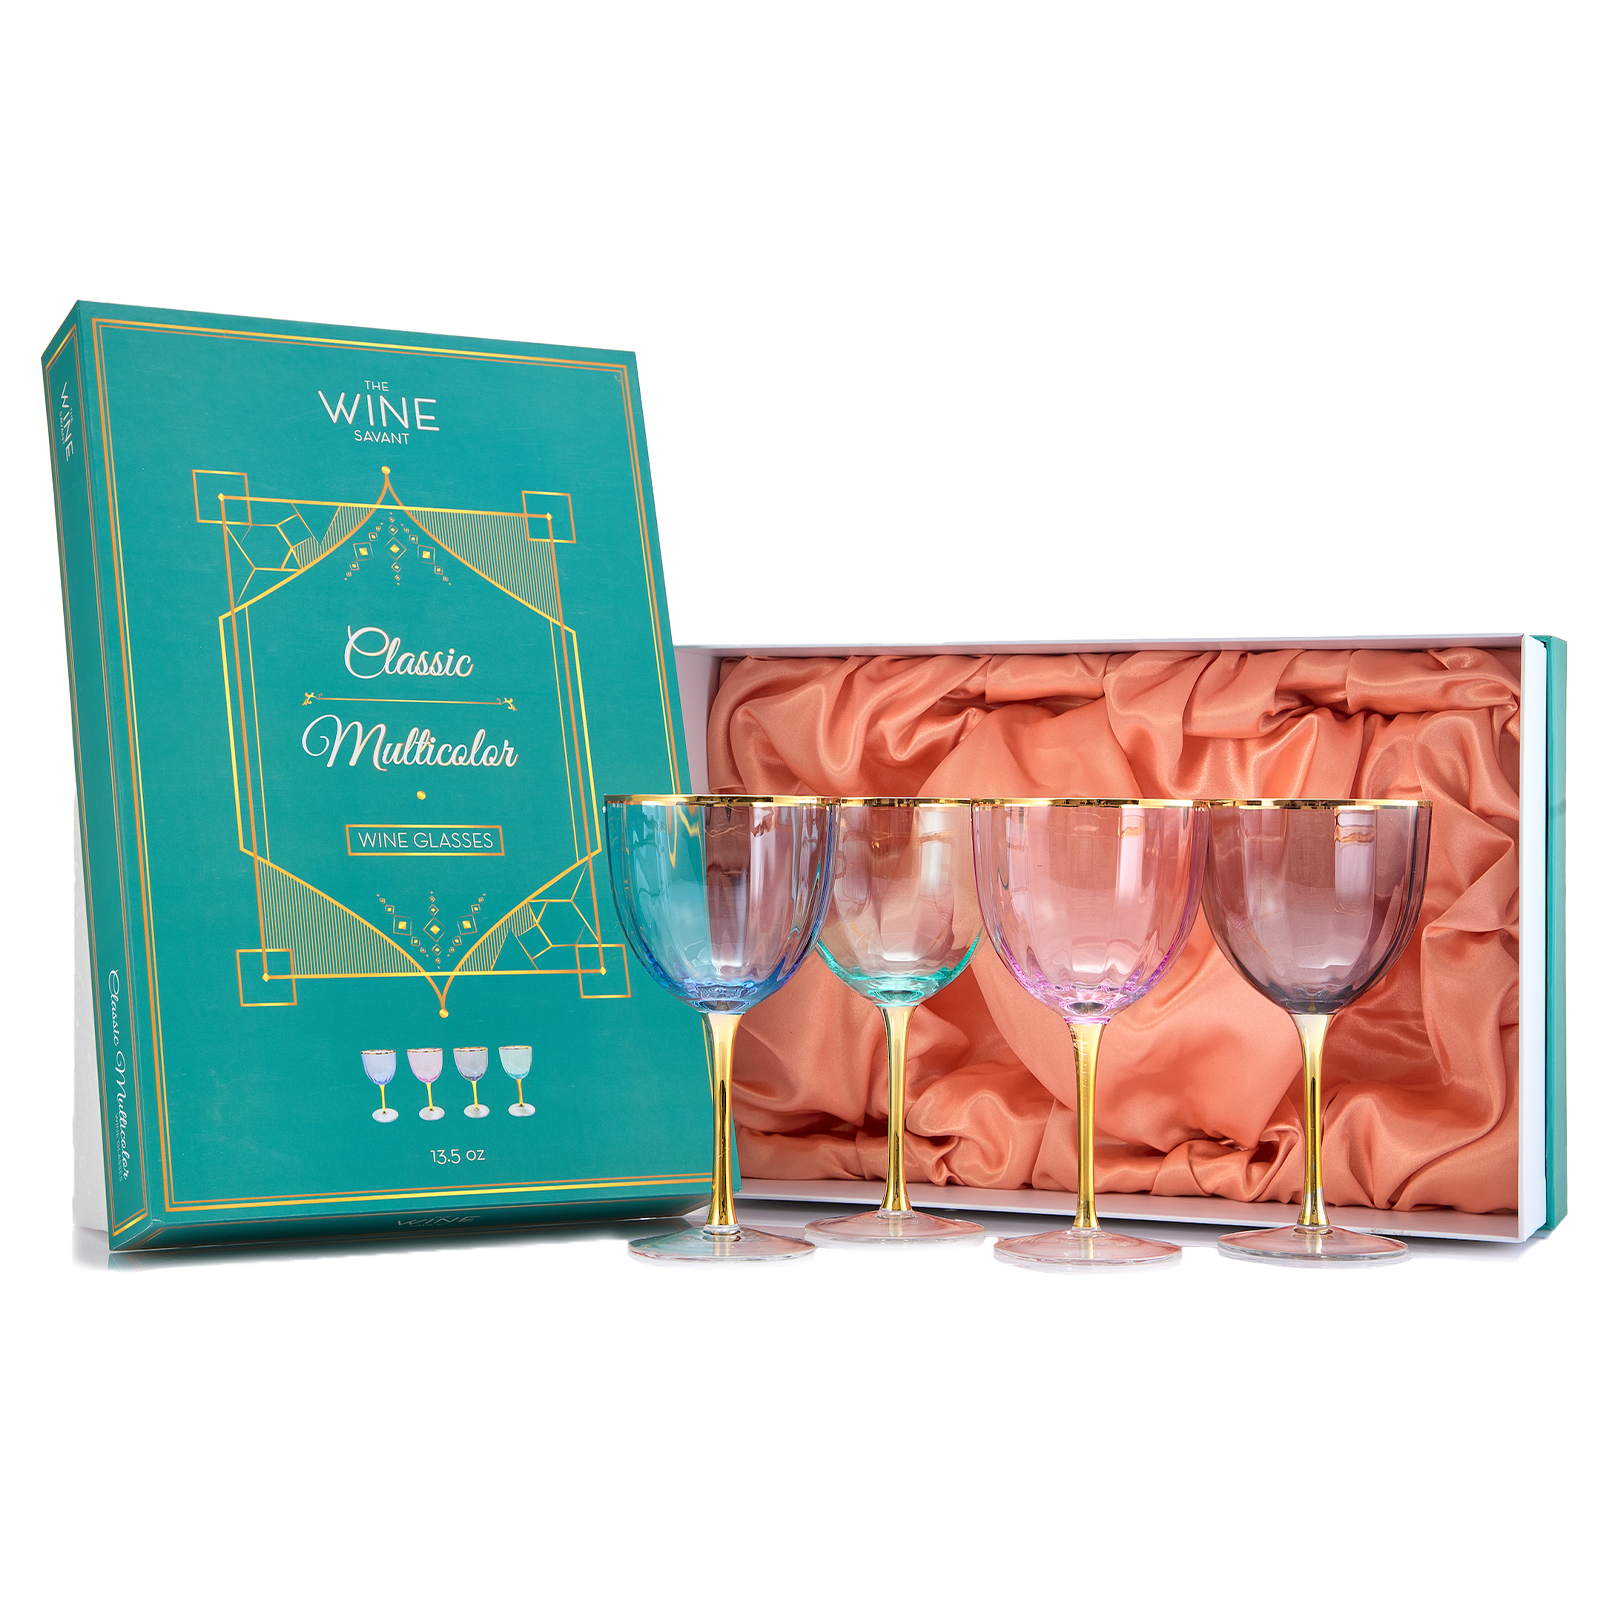 Slanted Rim Colored Wine Glasses by The Wine Savant – Set of 5